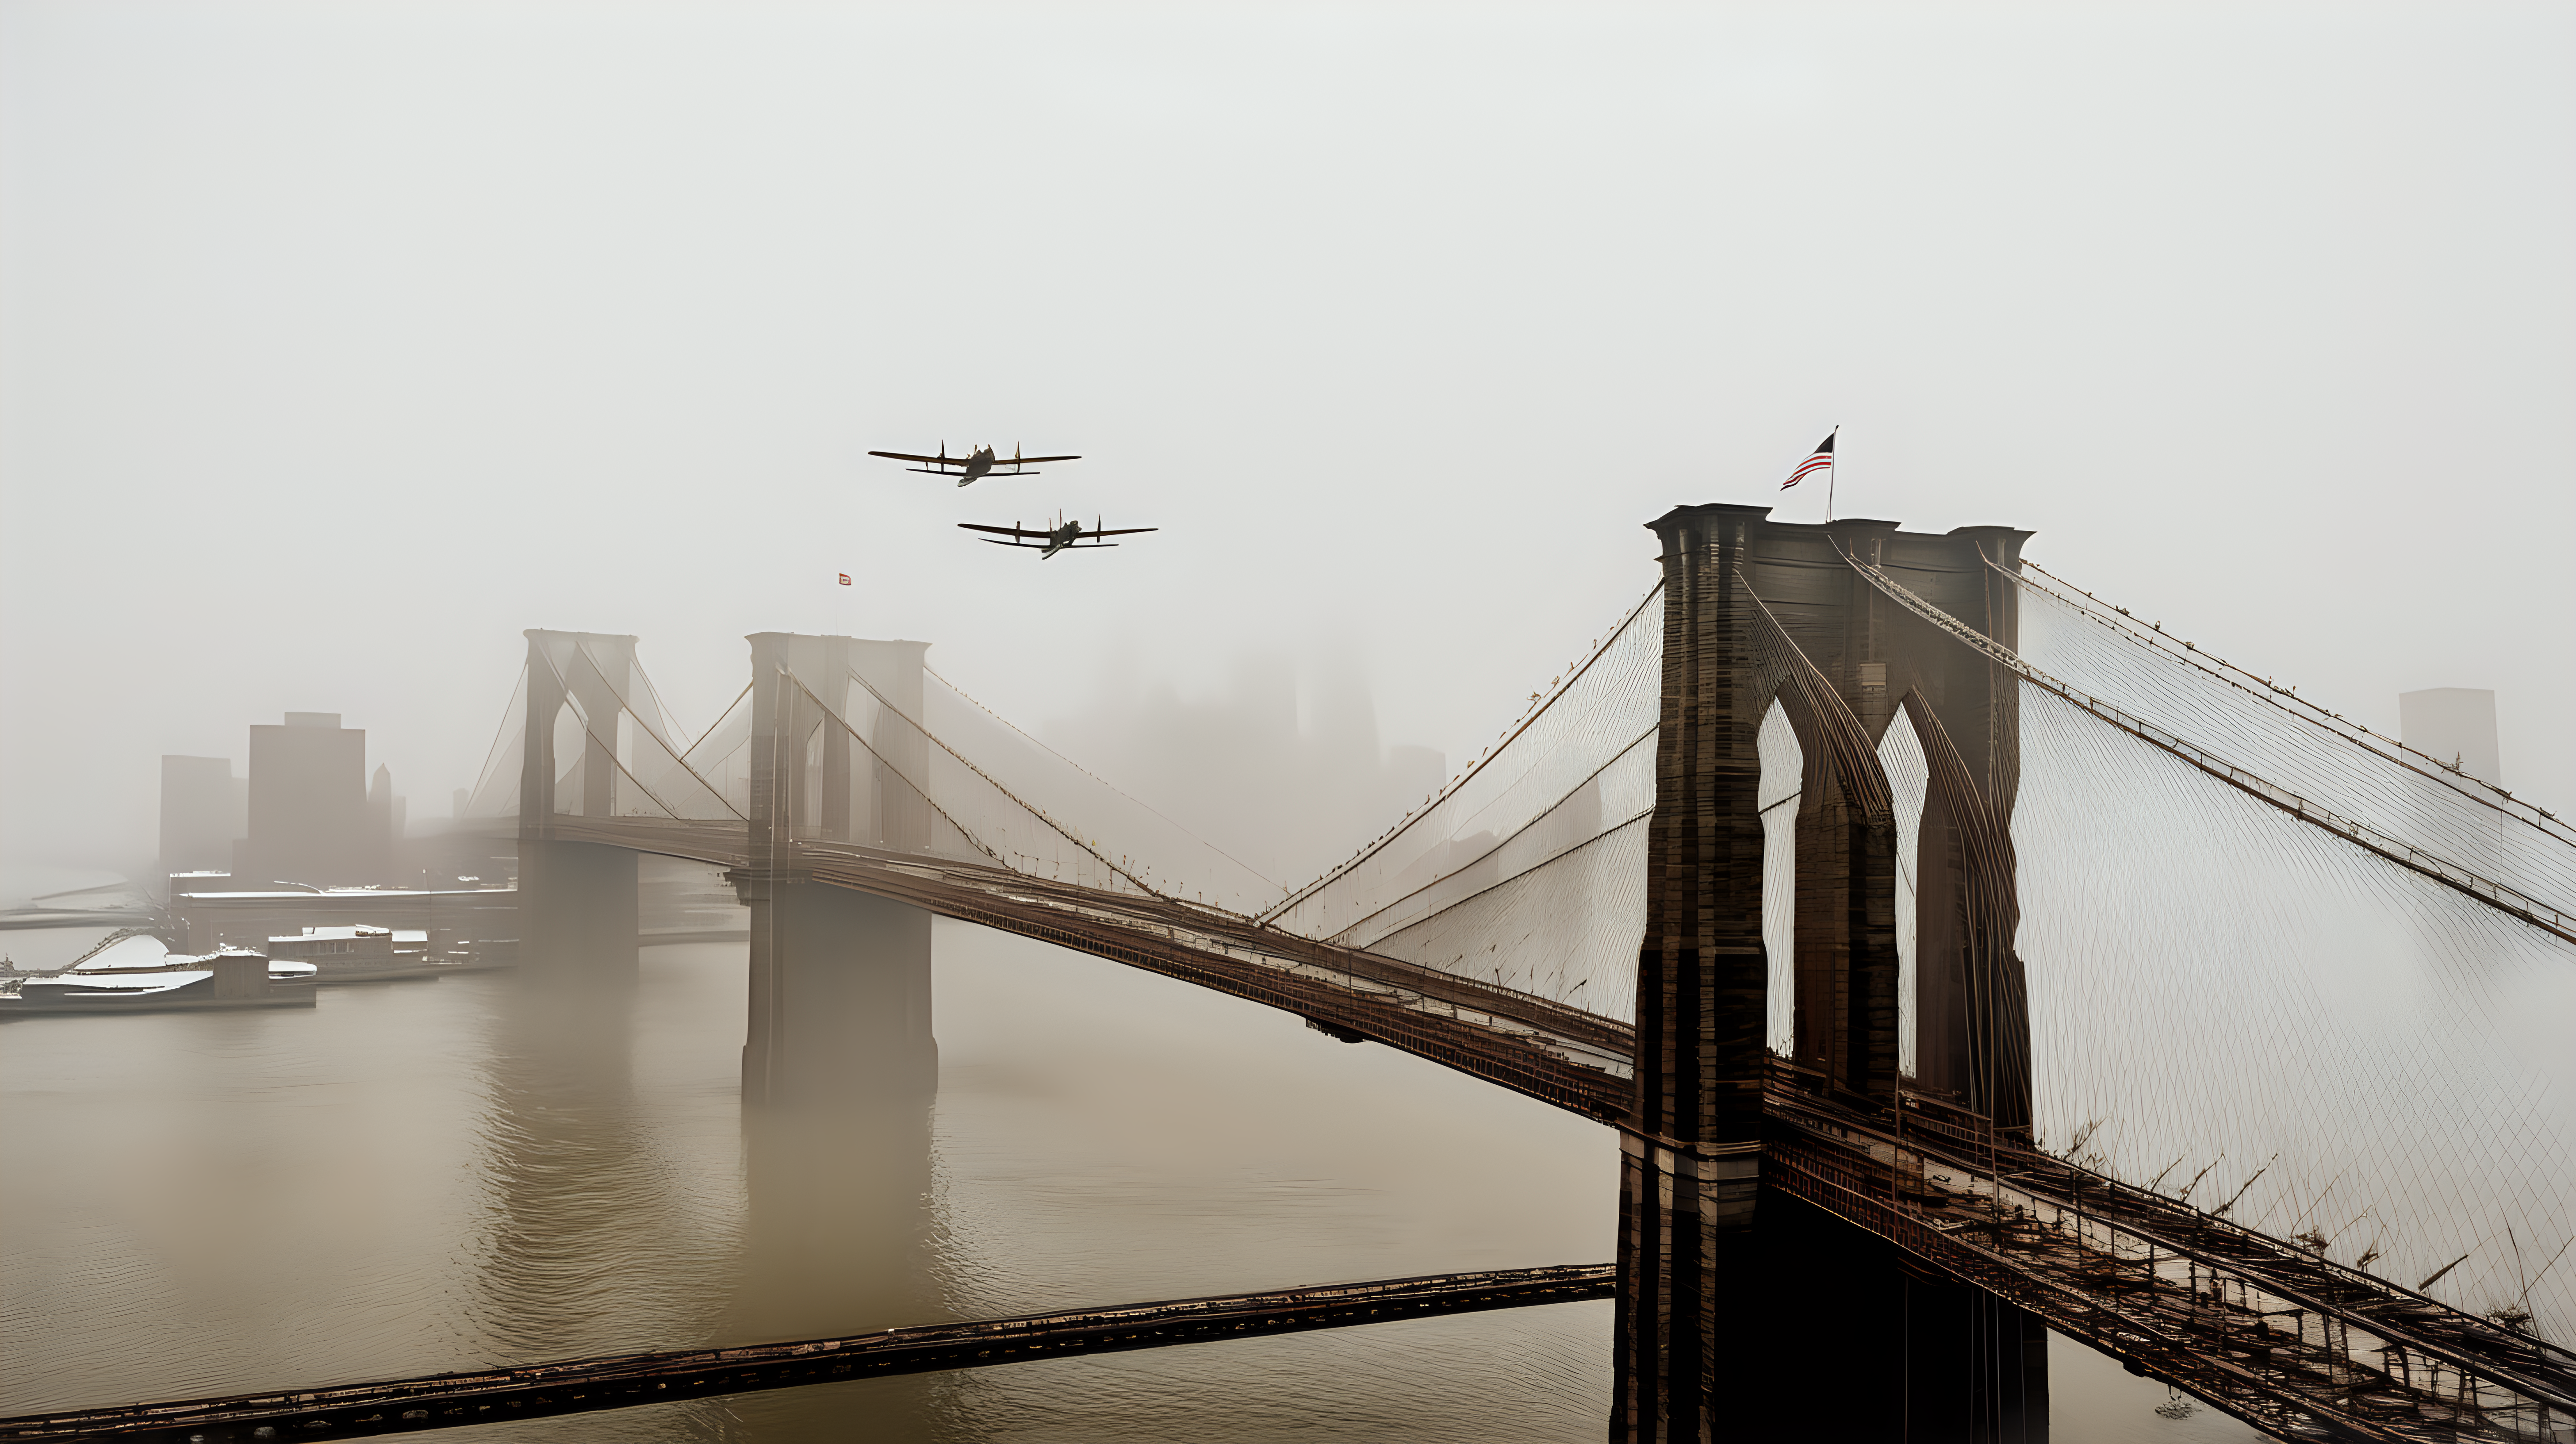 WW2 planes flying over Brooklyn Bridge shrouded in